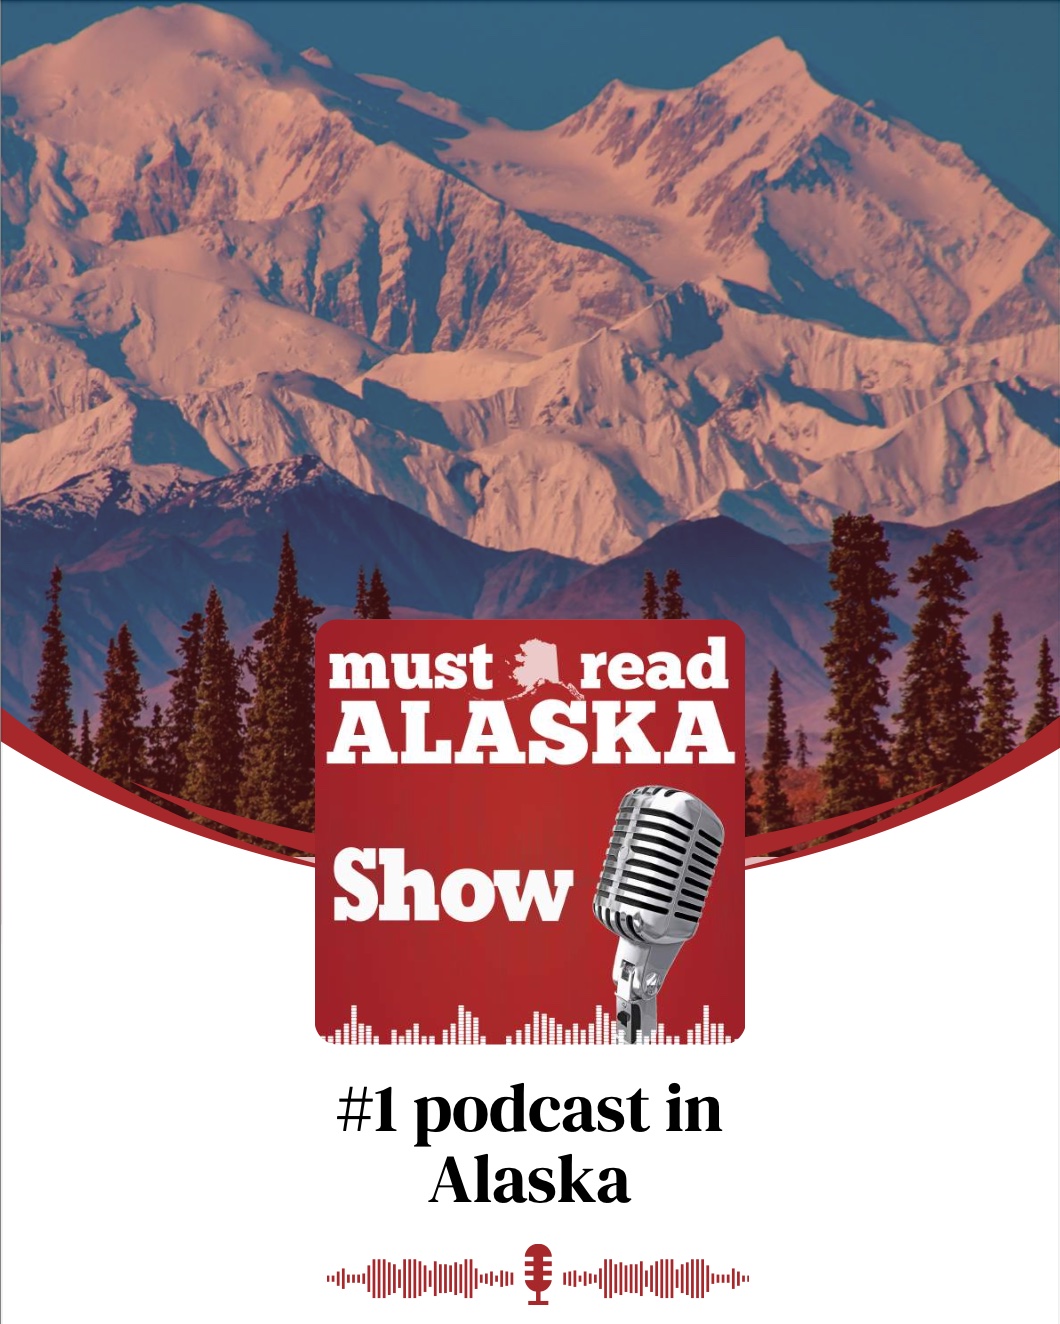 BOGO marketing opportunity available on Alaska's No. 1 podcast — The Must Read Alaska Show